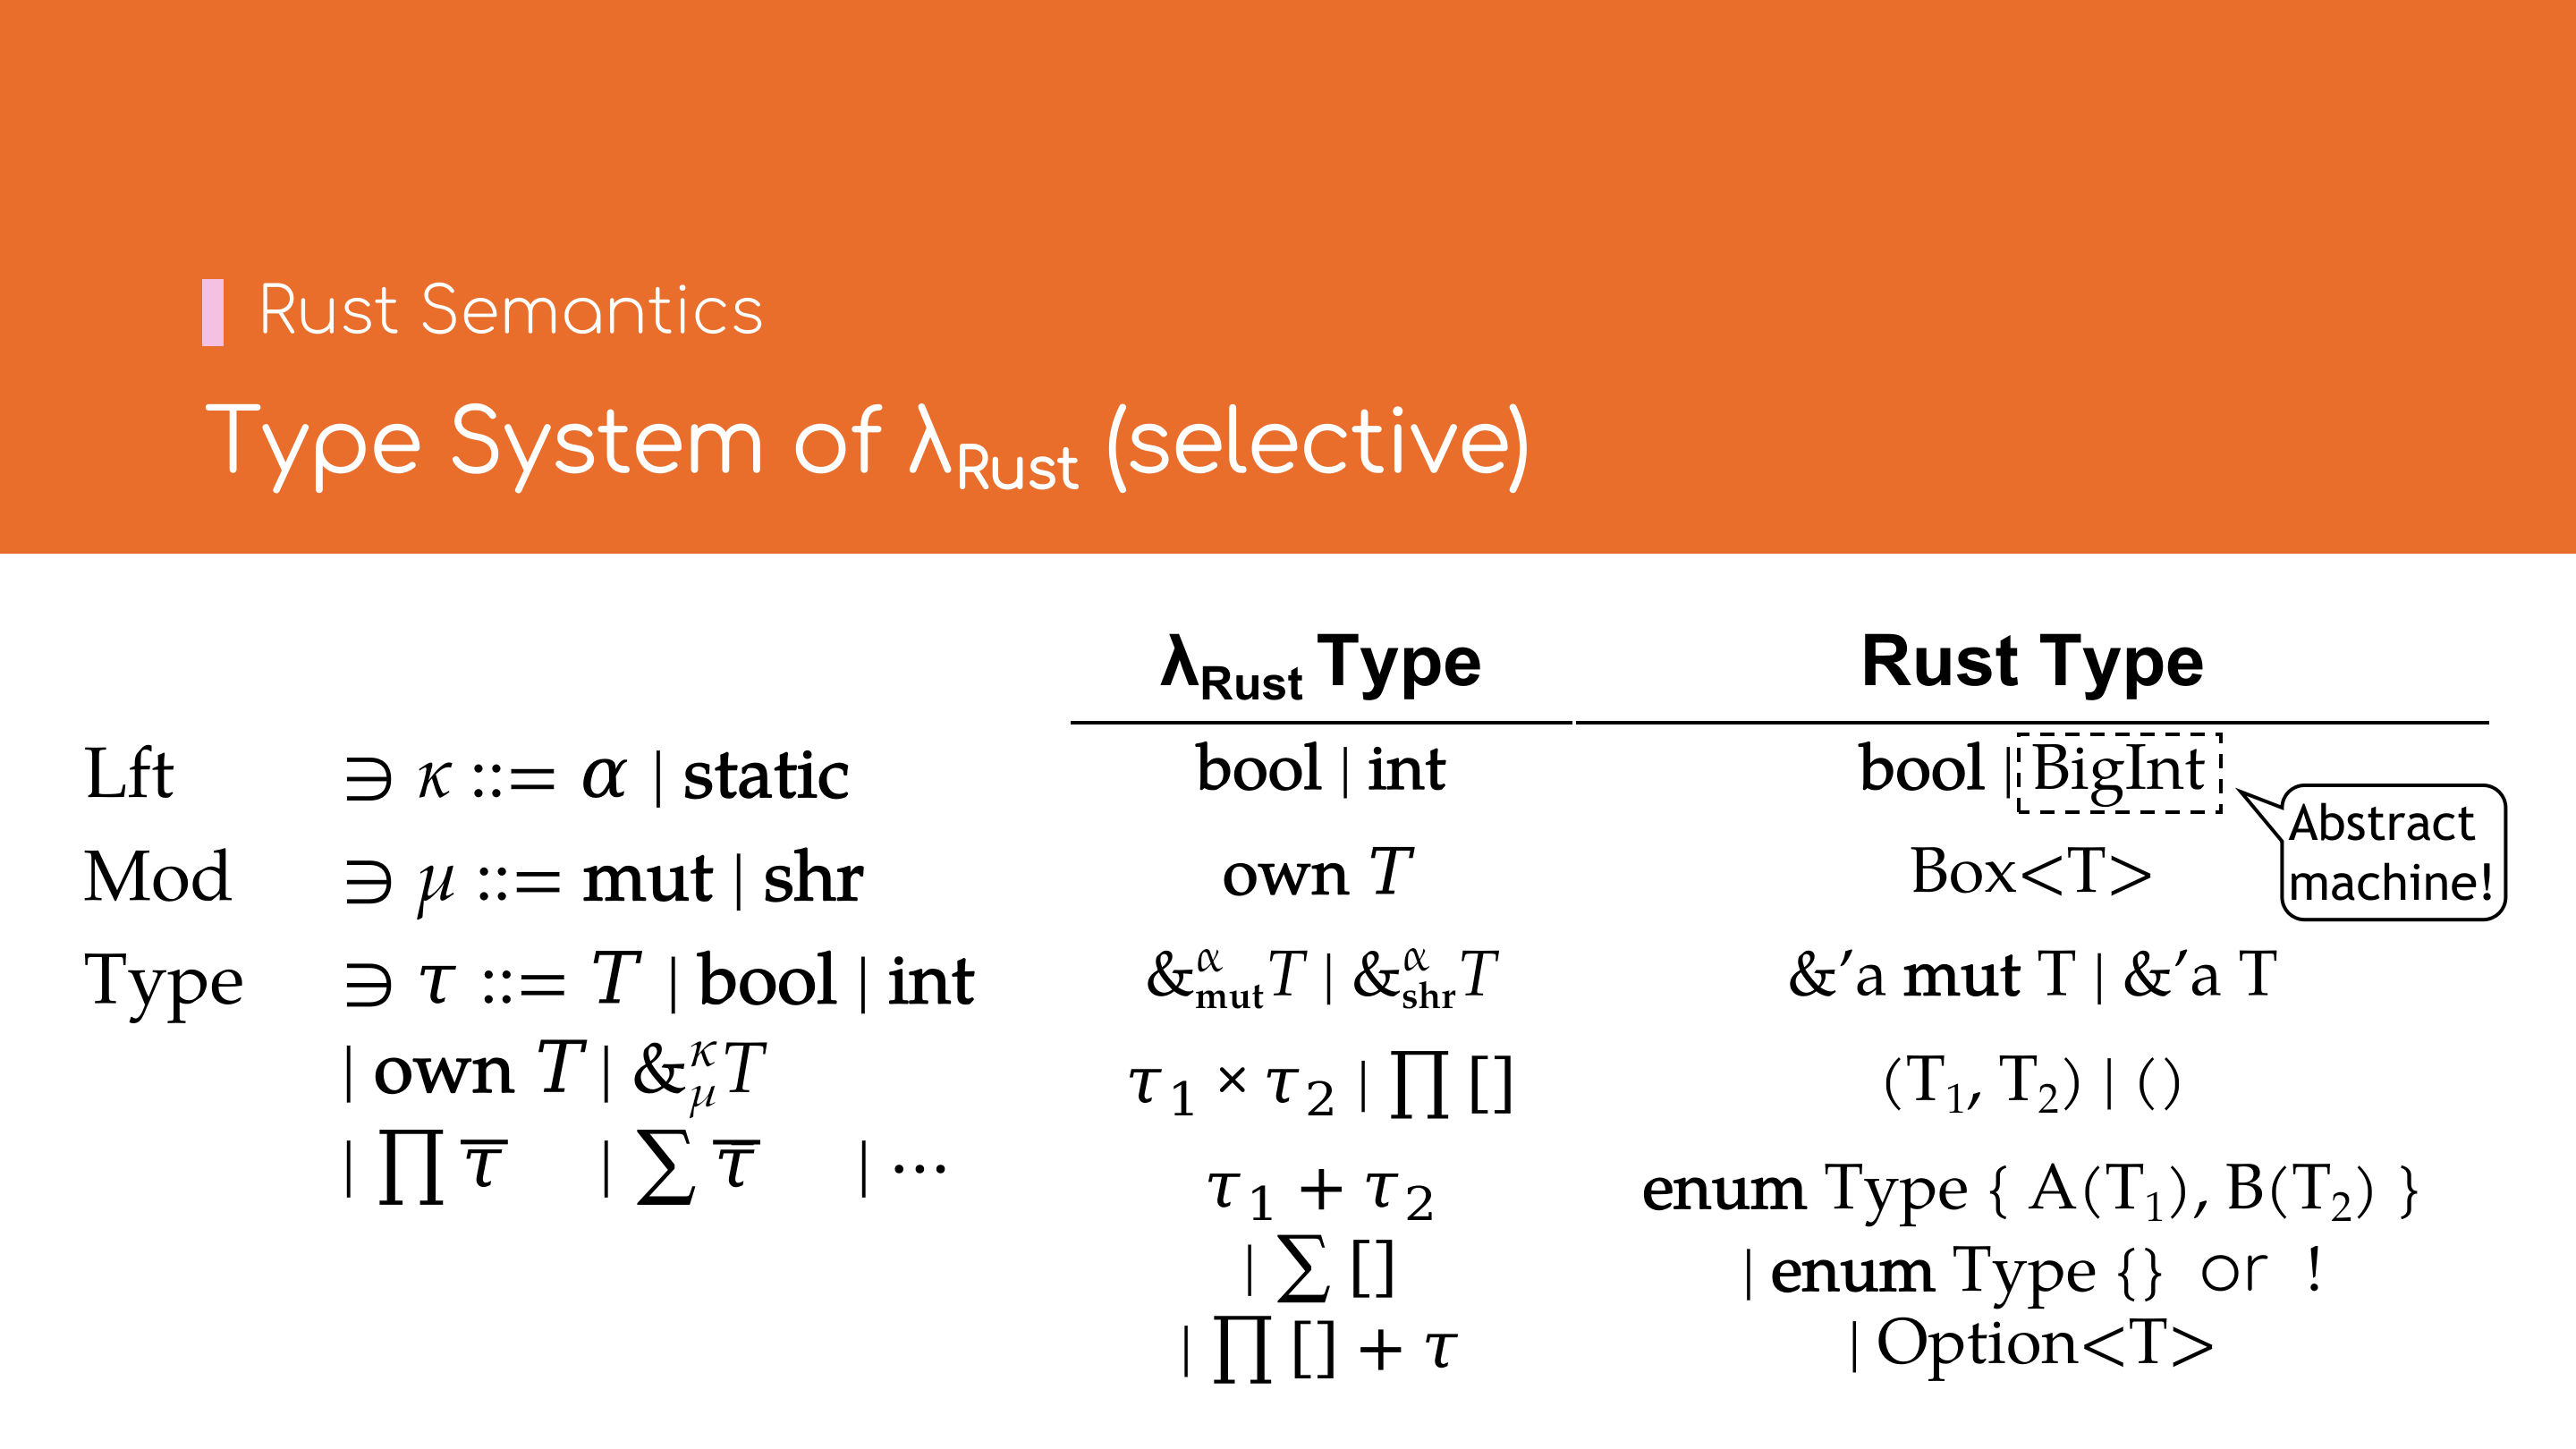 Type System